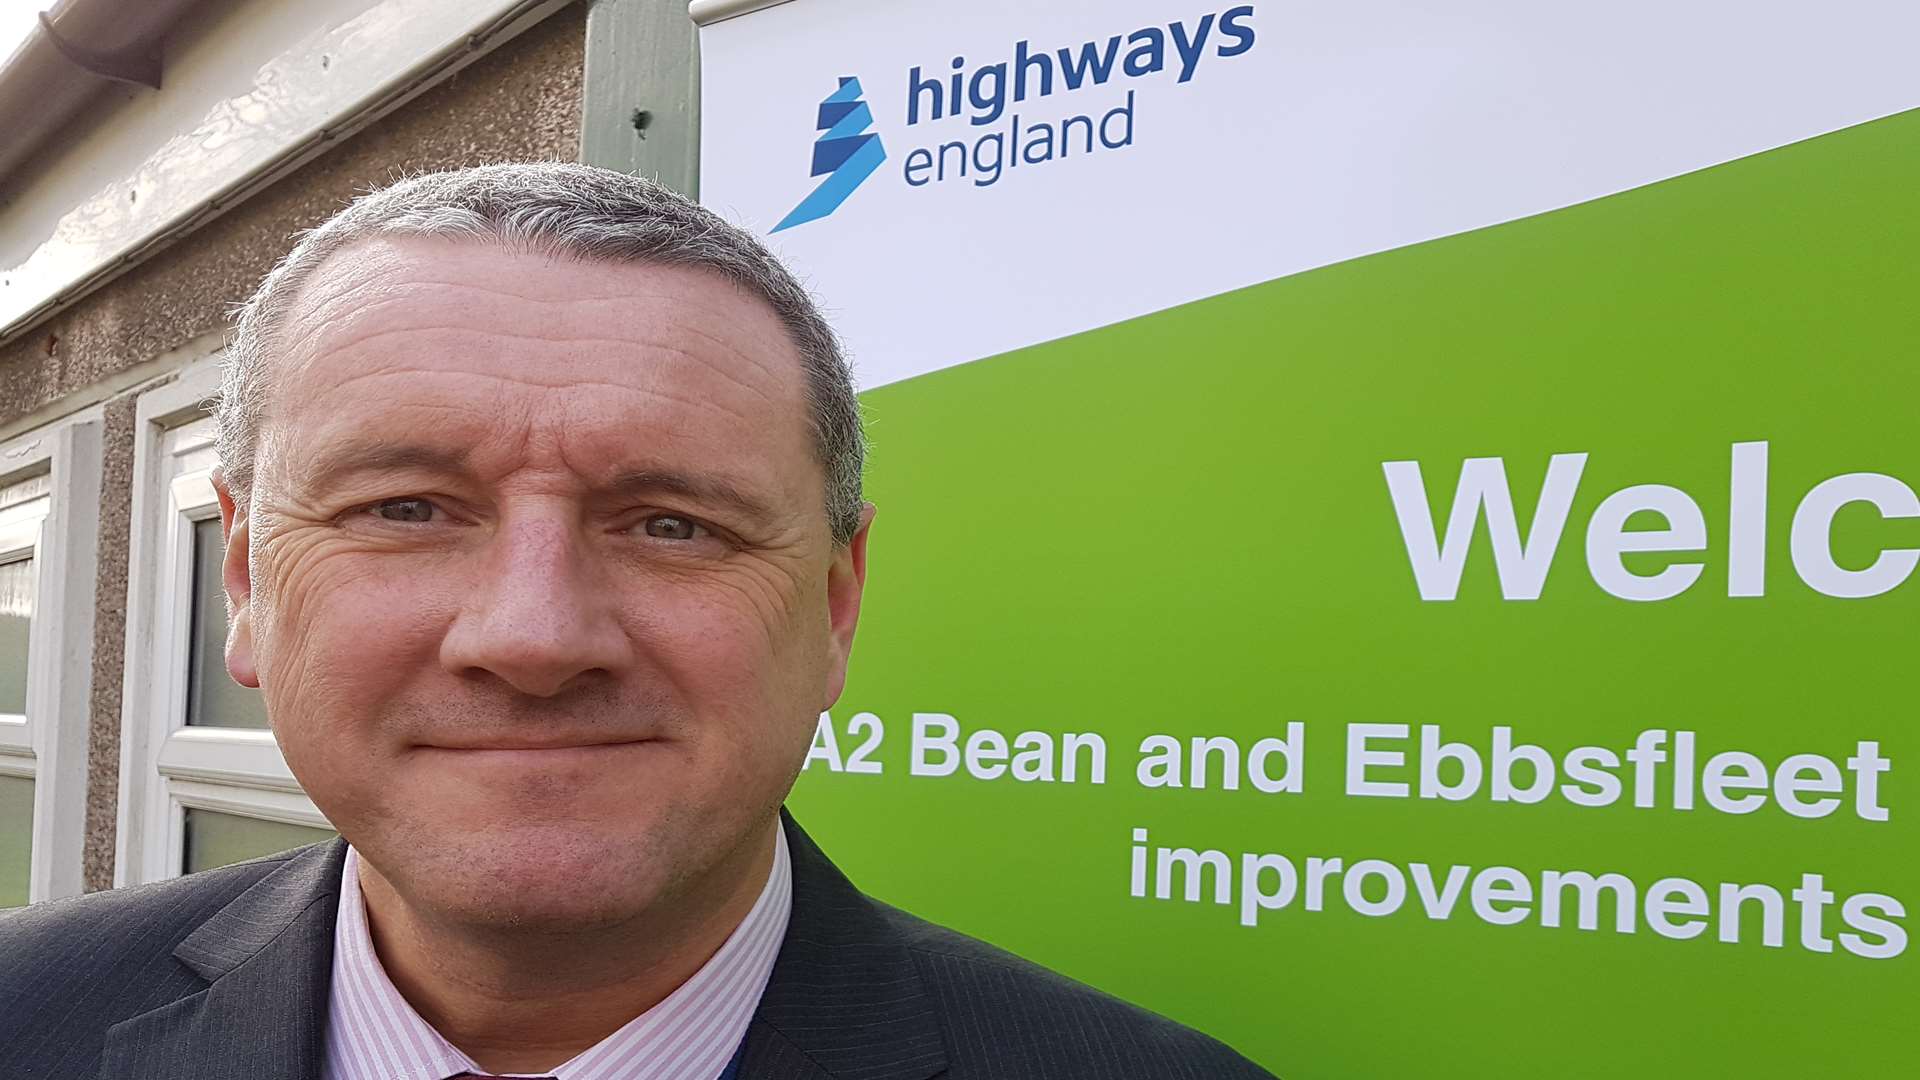 Highways England senior project manager, Brian Gash